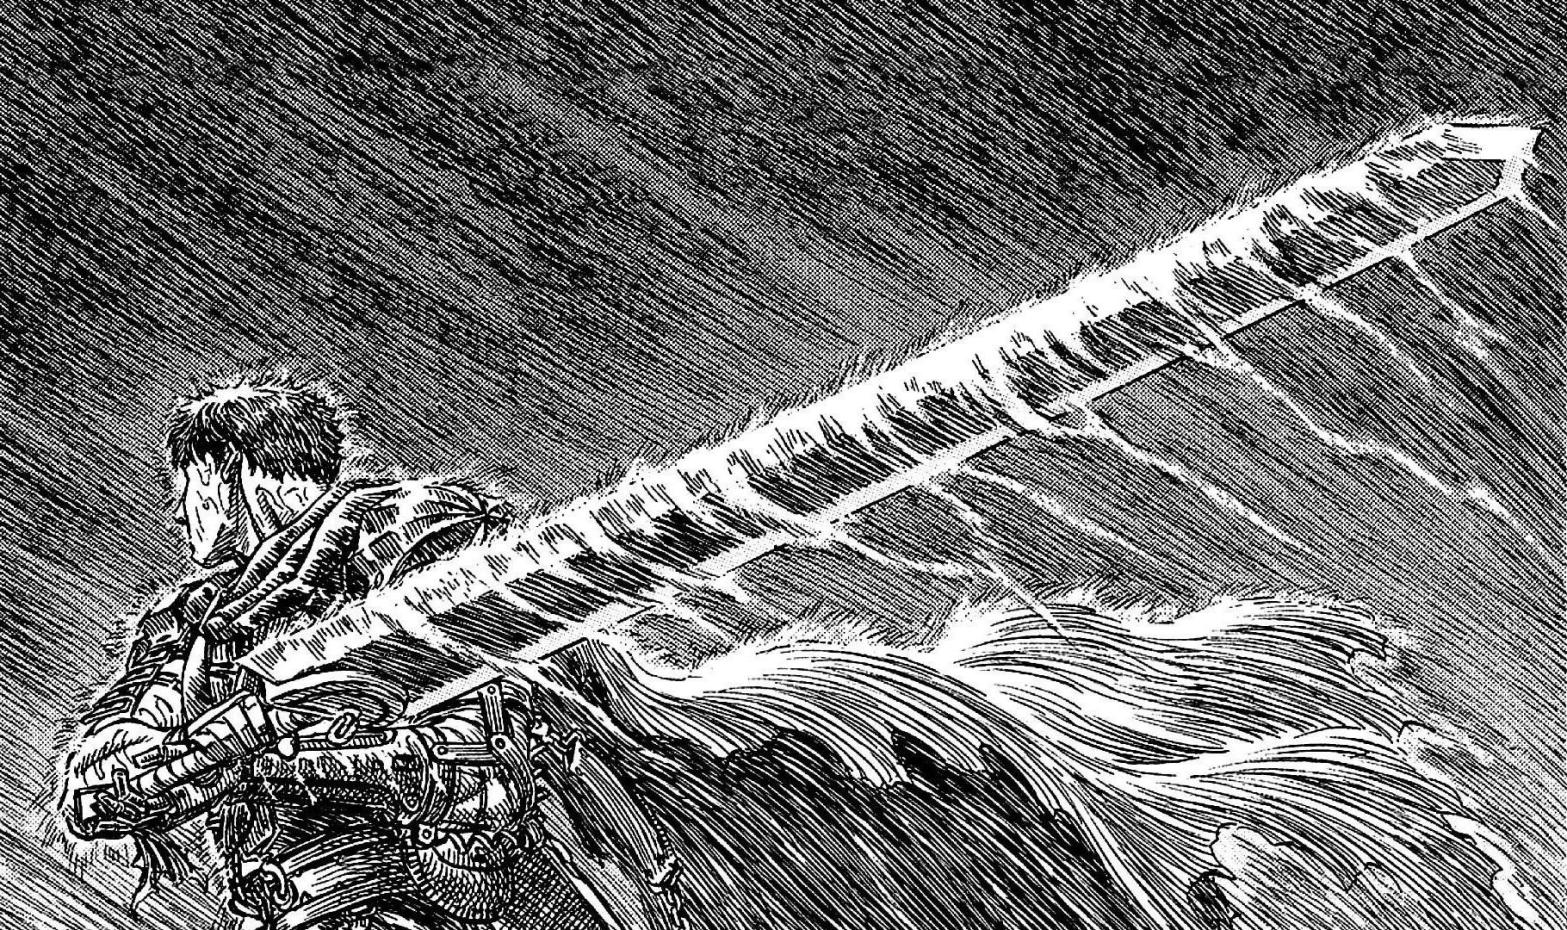 Guts the warrior holds along his giant greatsword in the pouring rain, his cloak billowing behind him. (Image: Kentaro Miura/Hakushensha./Dark Horse)